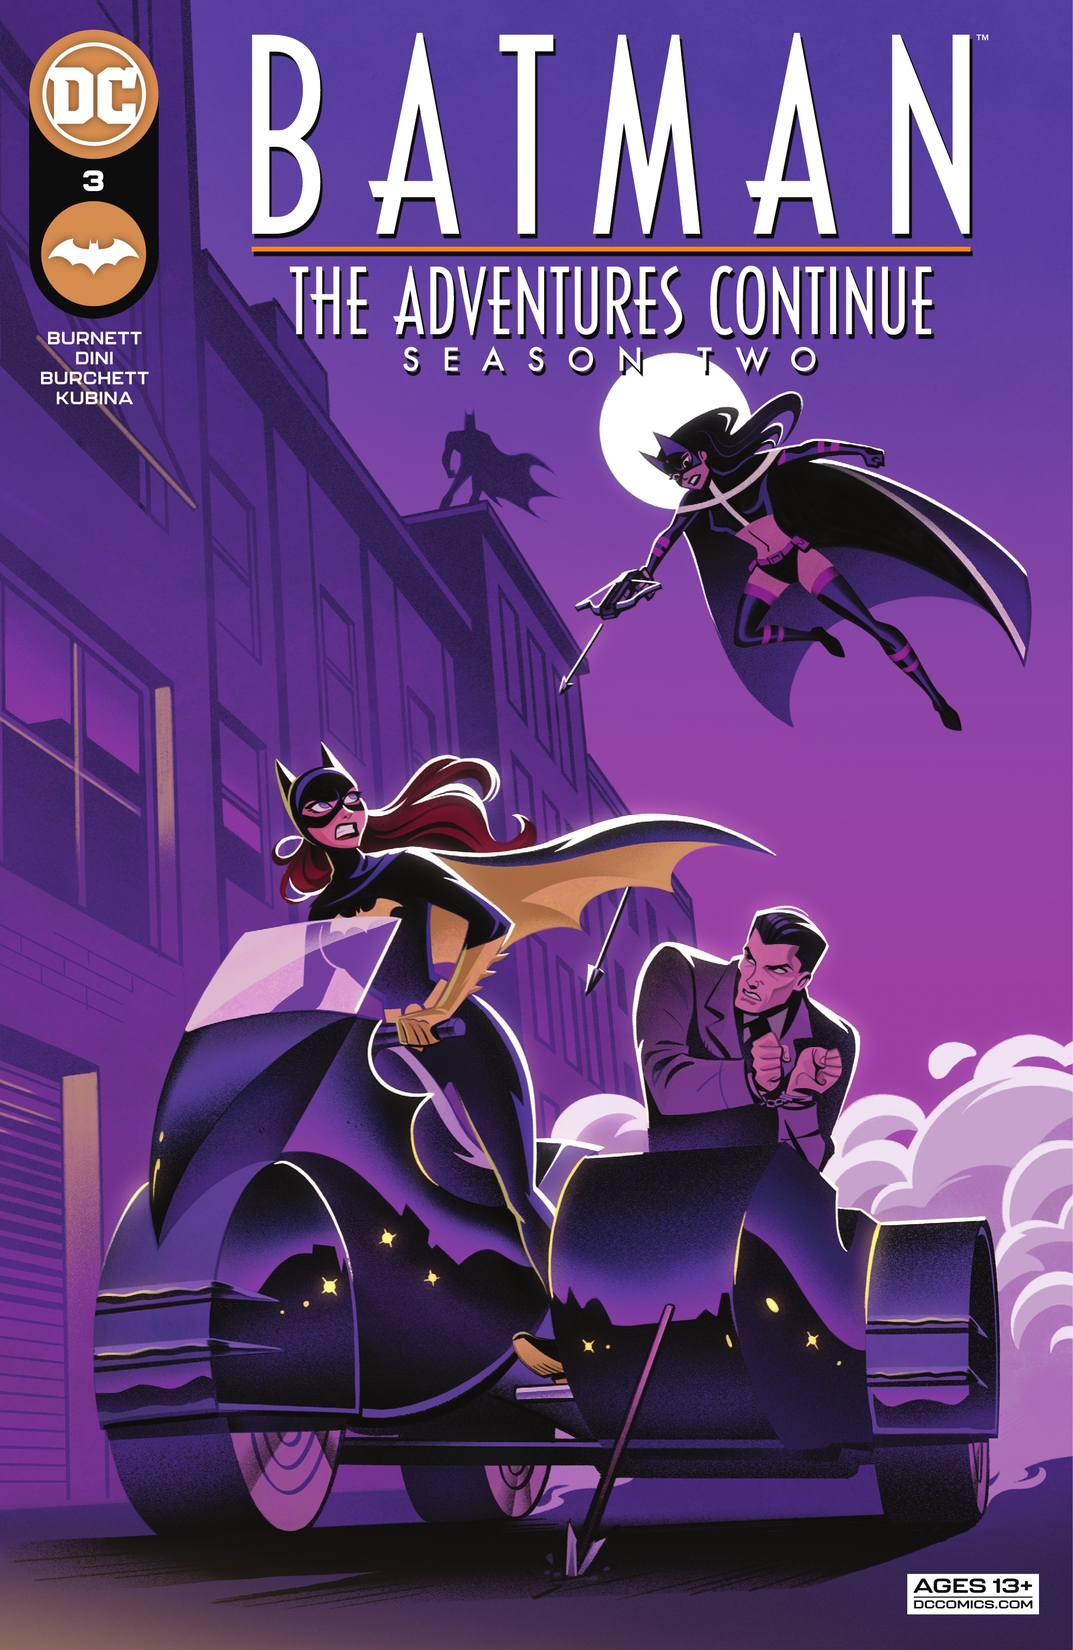 Batman: The Adventures Continue Season Two #3 preview images